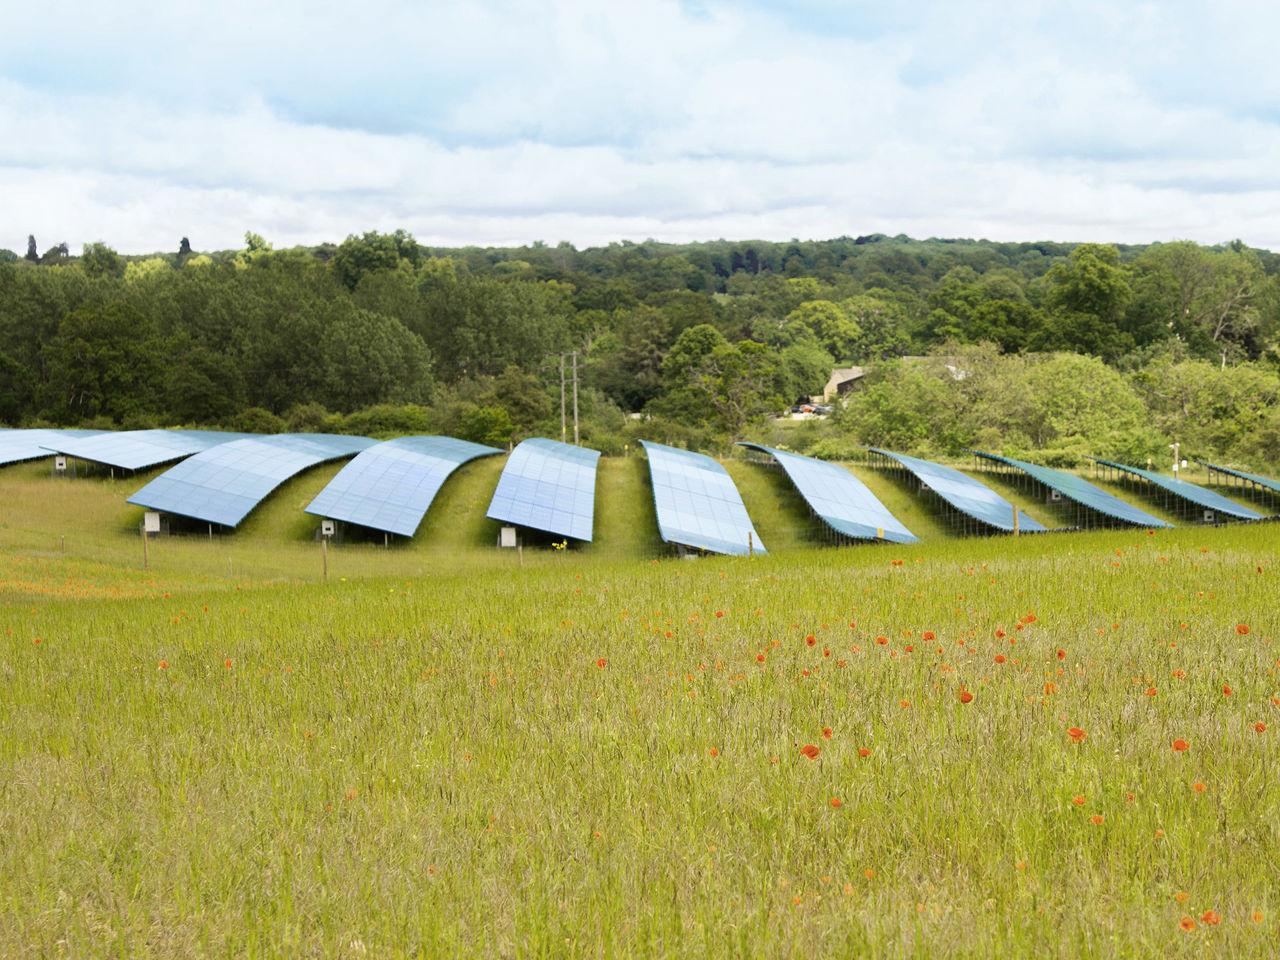 Solar panels on green grass.